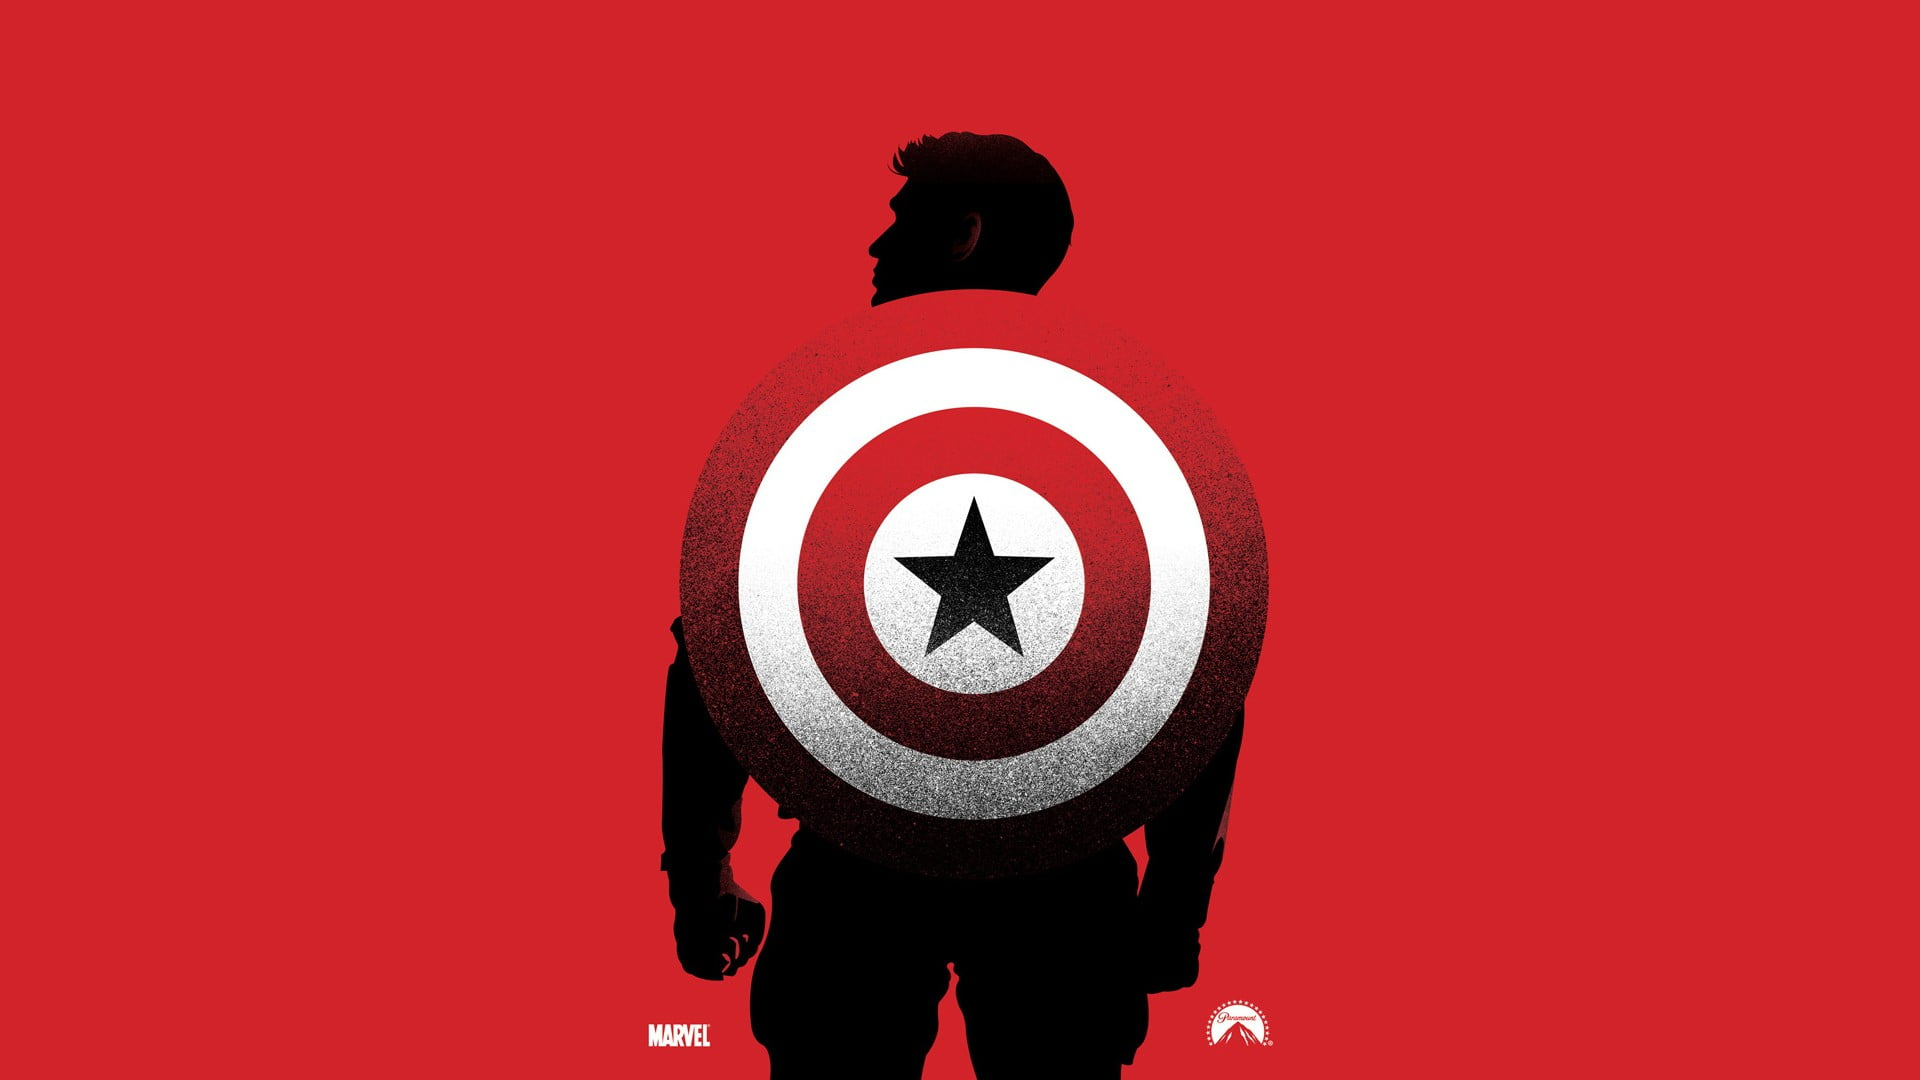 Marvel Captain America wallpaper Marvel Comics movies red